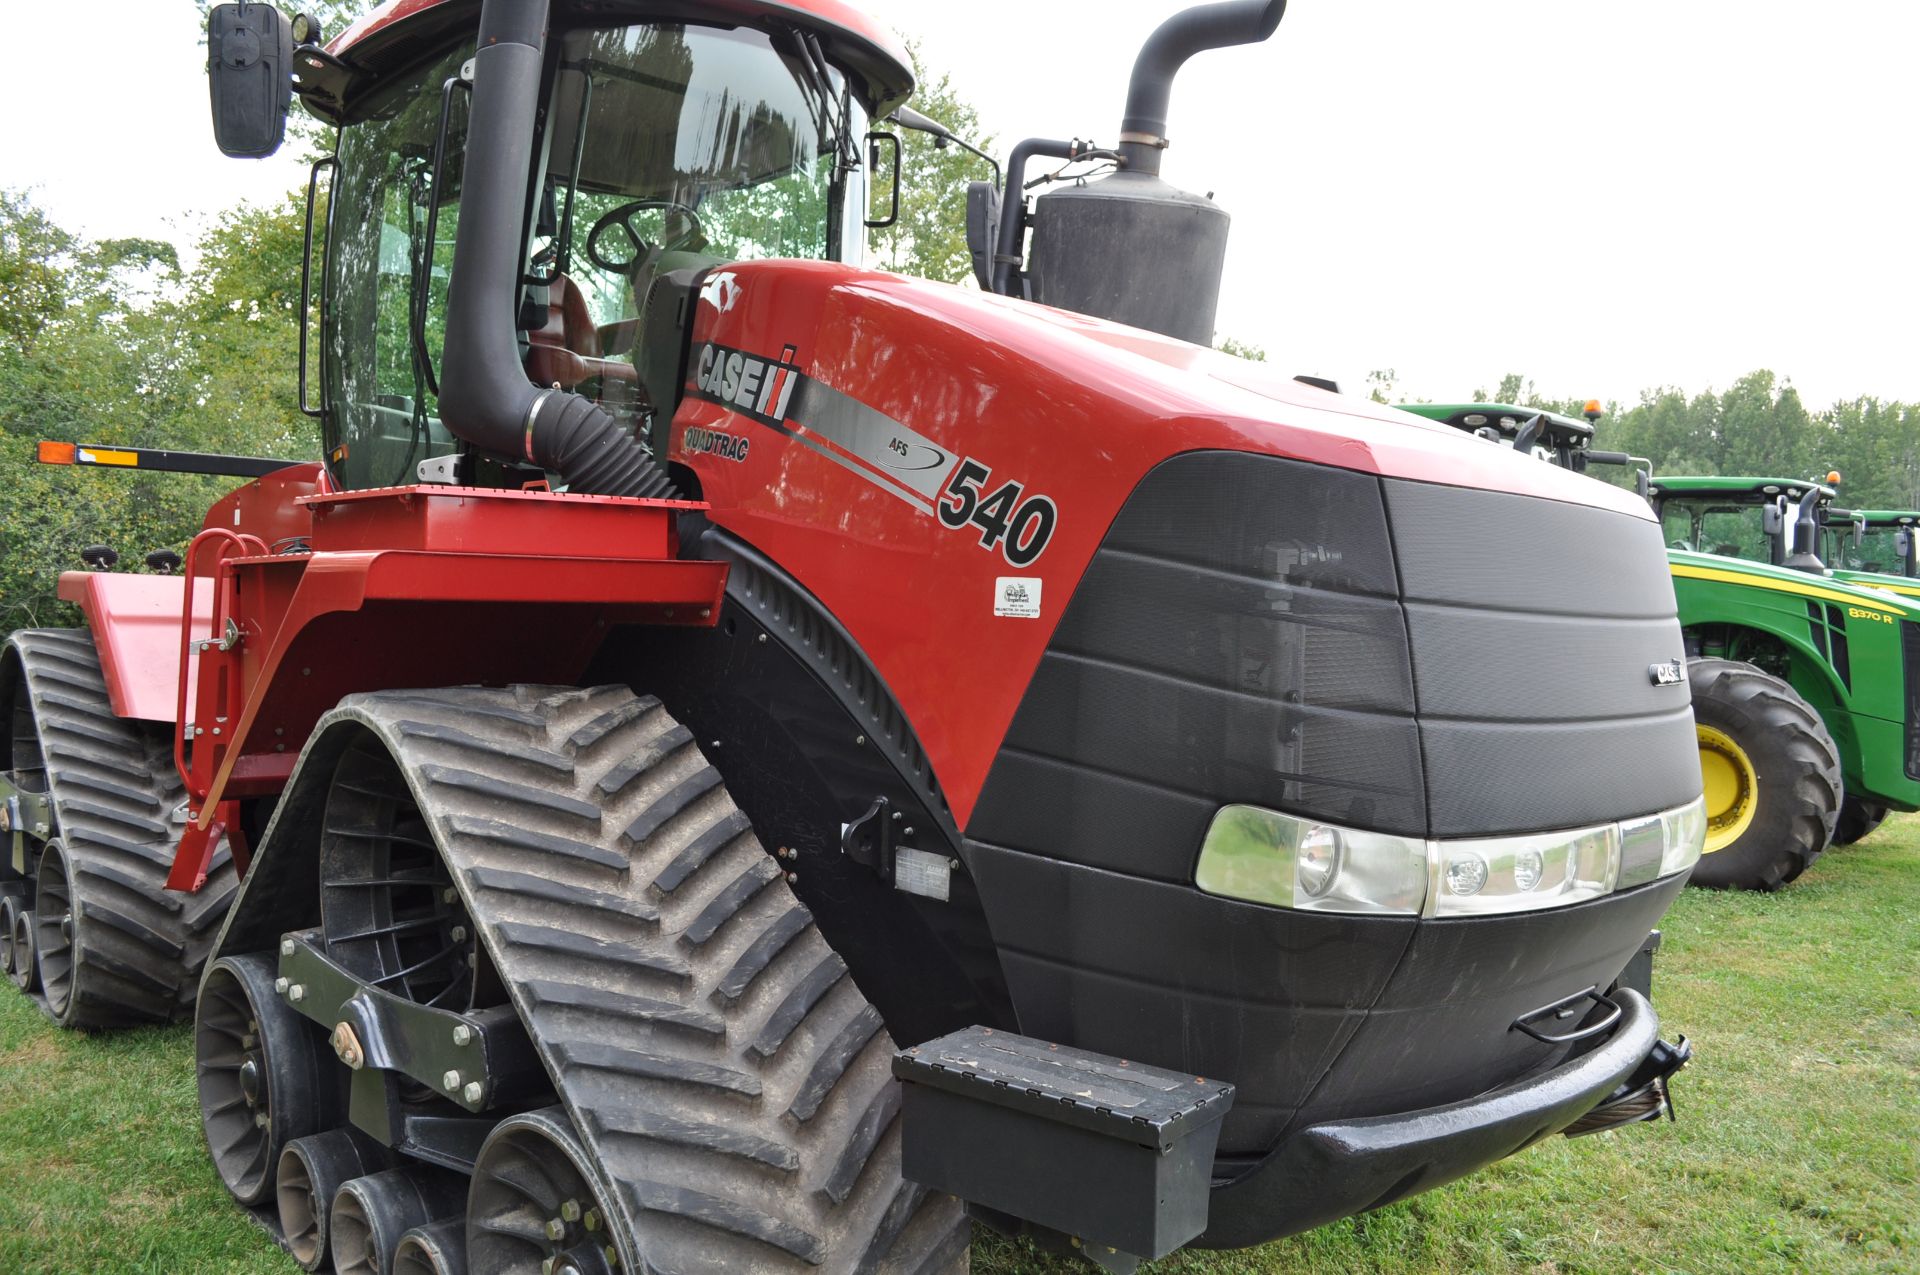 2015 Case IH 540 QuadTrac tractor, powershift, 30” belts, 6 hyd remotes, 1000 PTO, ag drawbar - Image 19 of 35